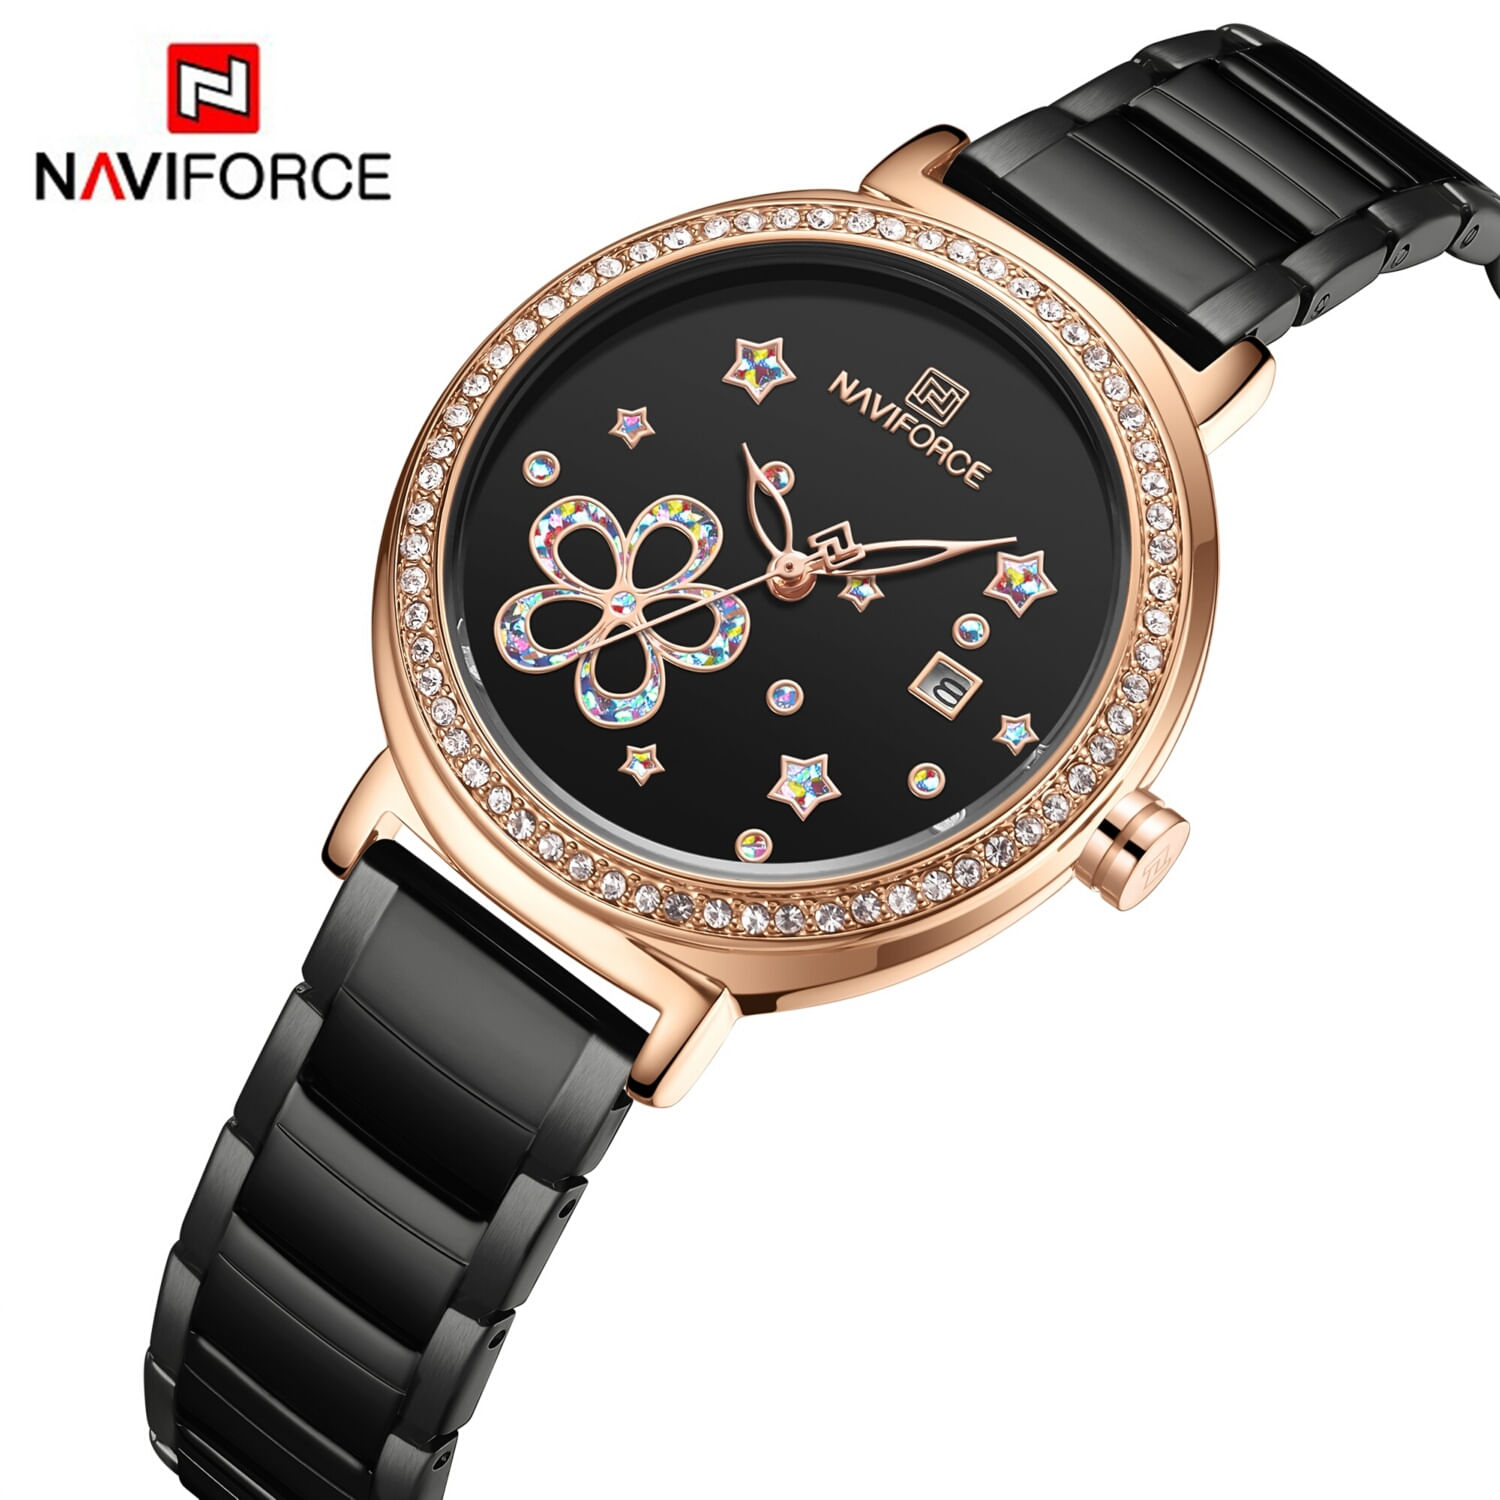 Reloj Naviforce Dama NF5016 NEGRO ORO ROSA Analógico Calendario Correa Acero Inoxidable Elegante